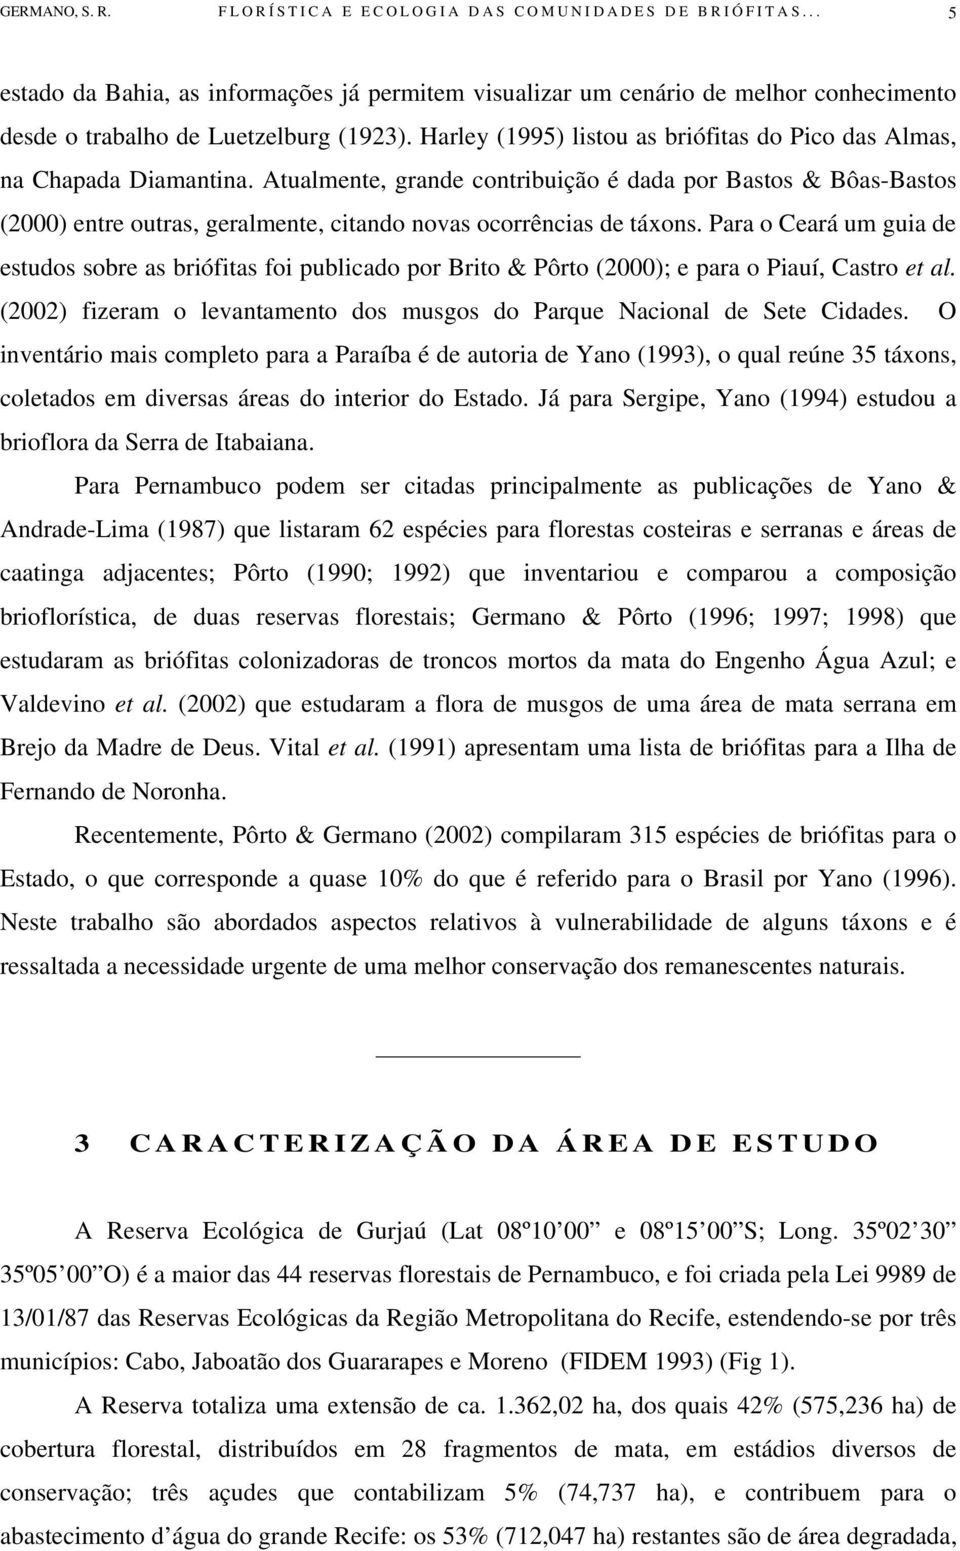 Harley (1995) listou as briófitas do Pico das Almas, na Chapada Diamantina.